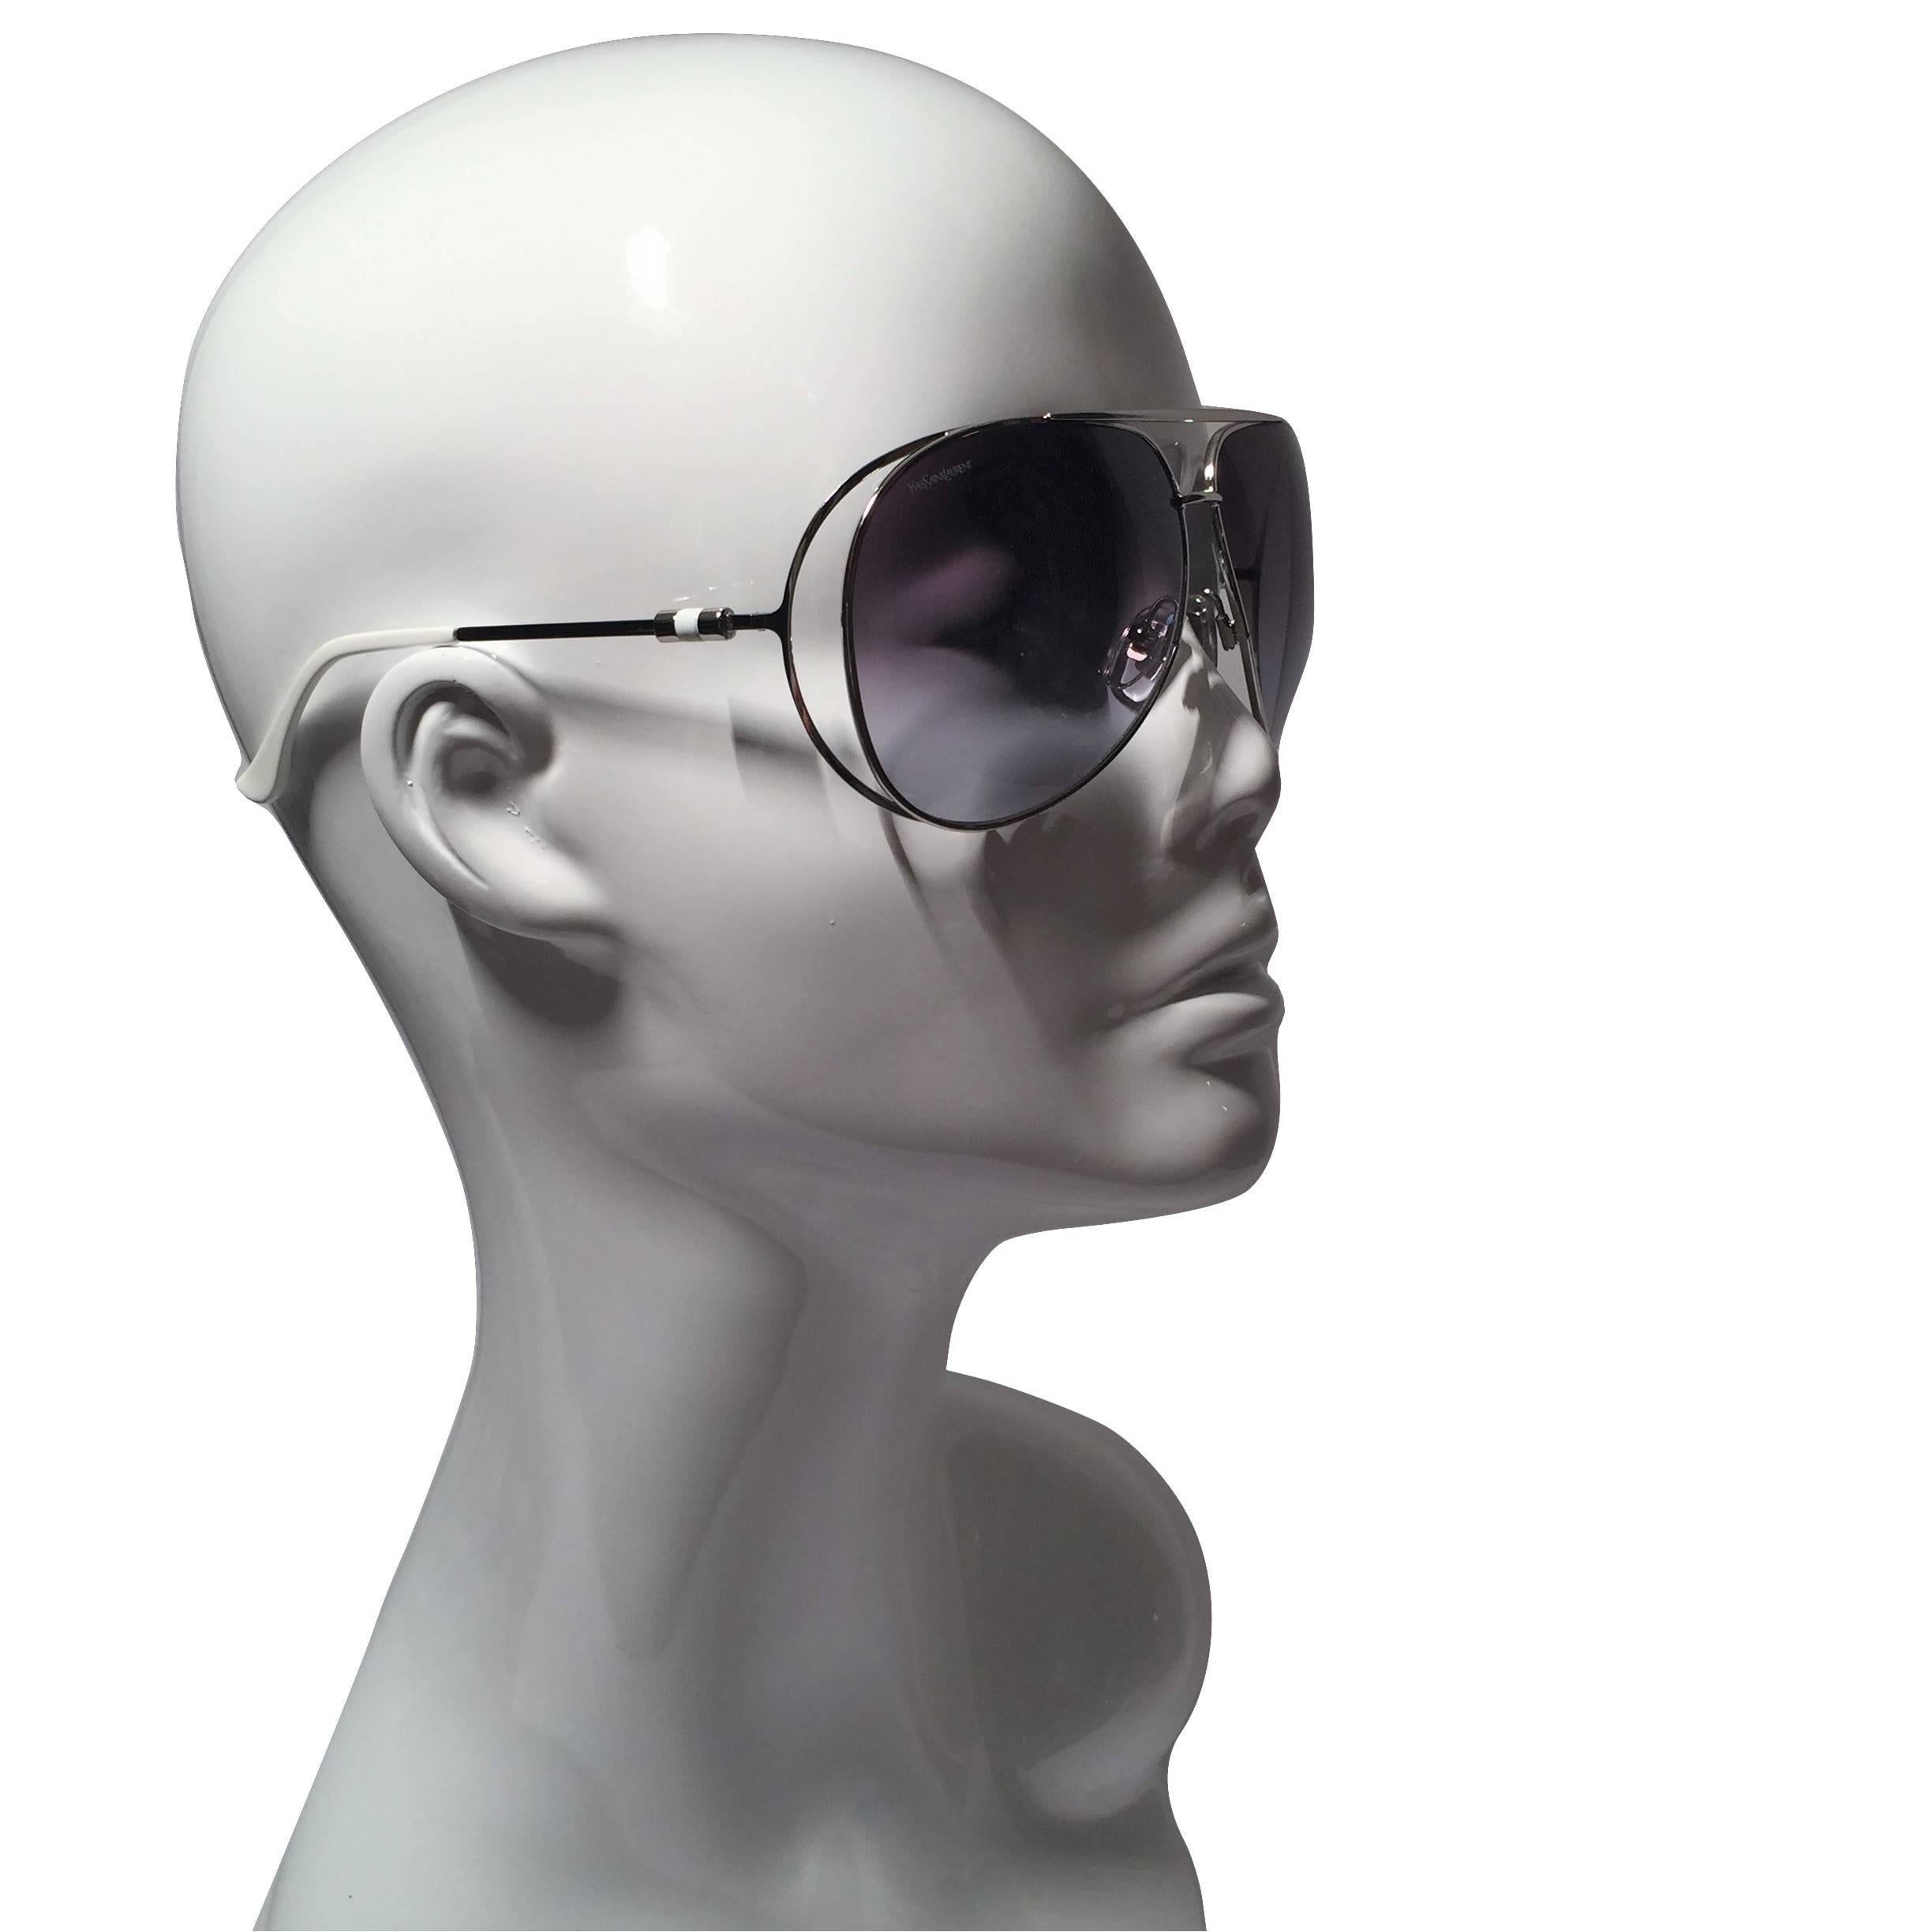 New Yves Saint Laurent YSL Aviator Sunglasses  With Case 3